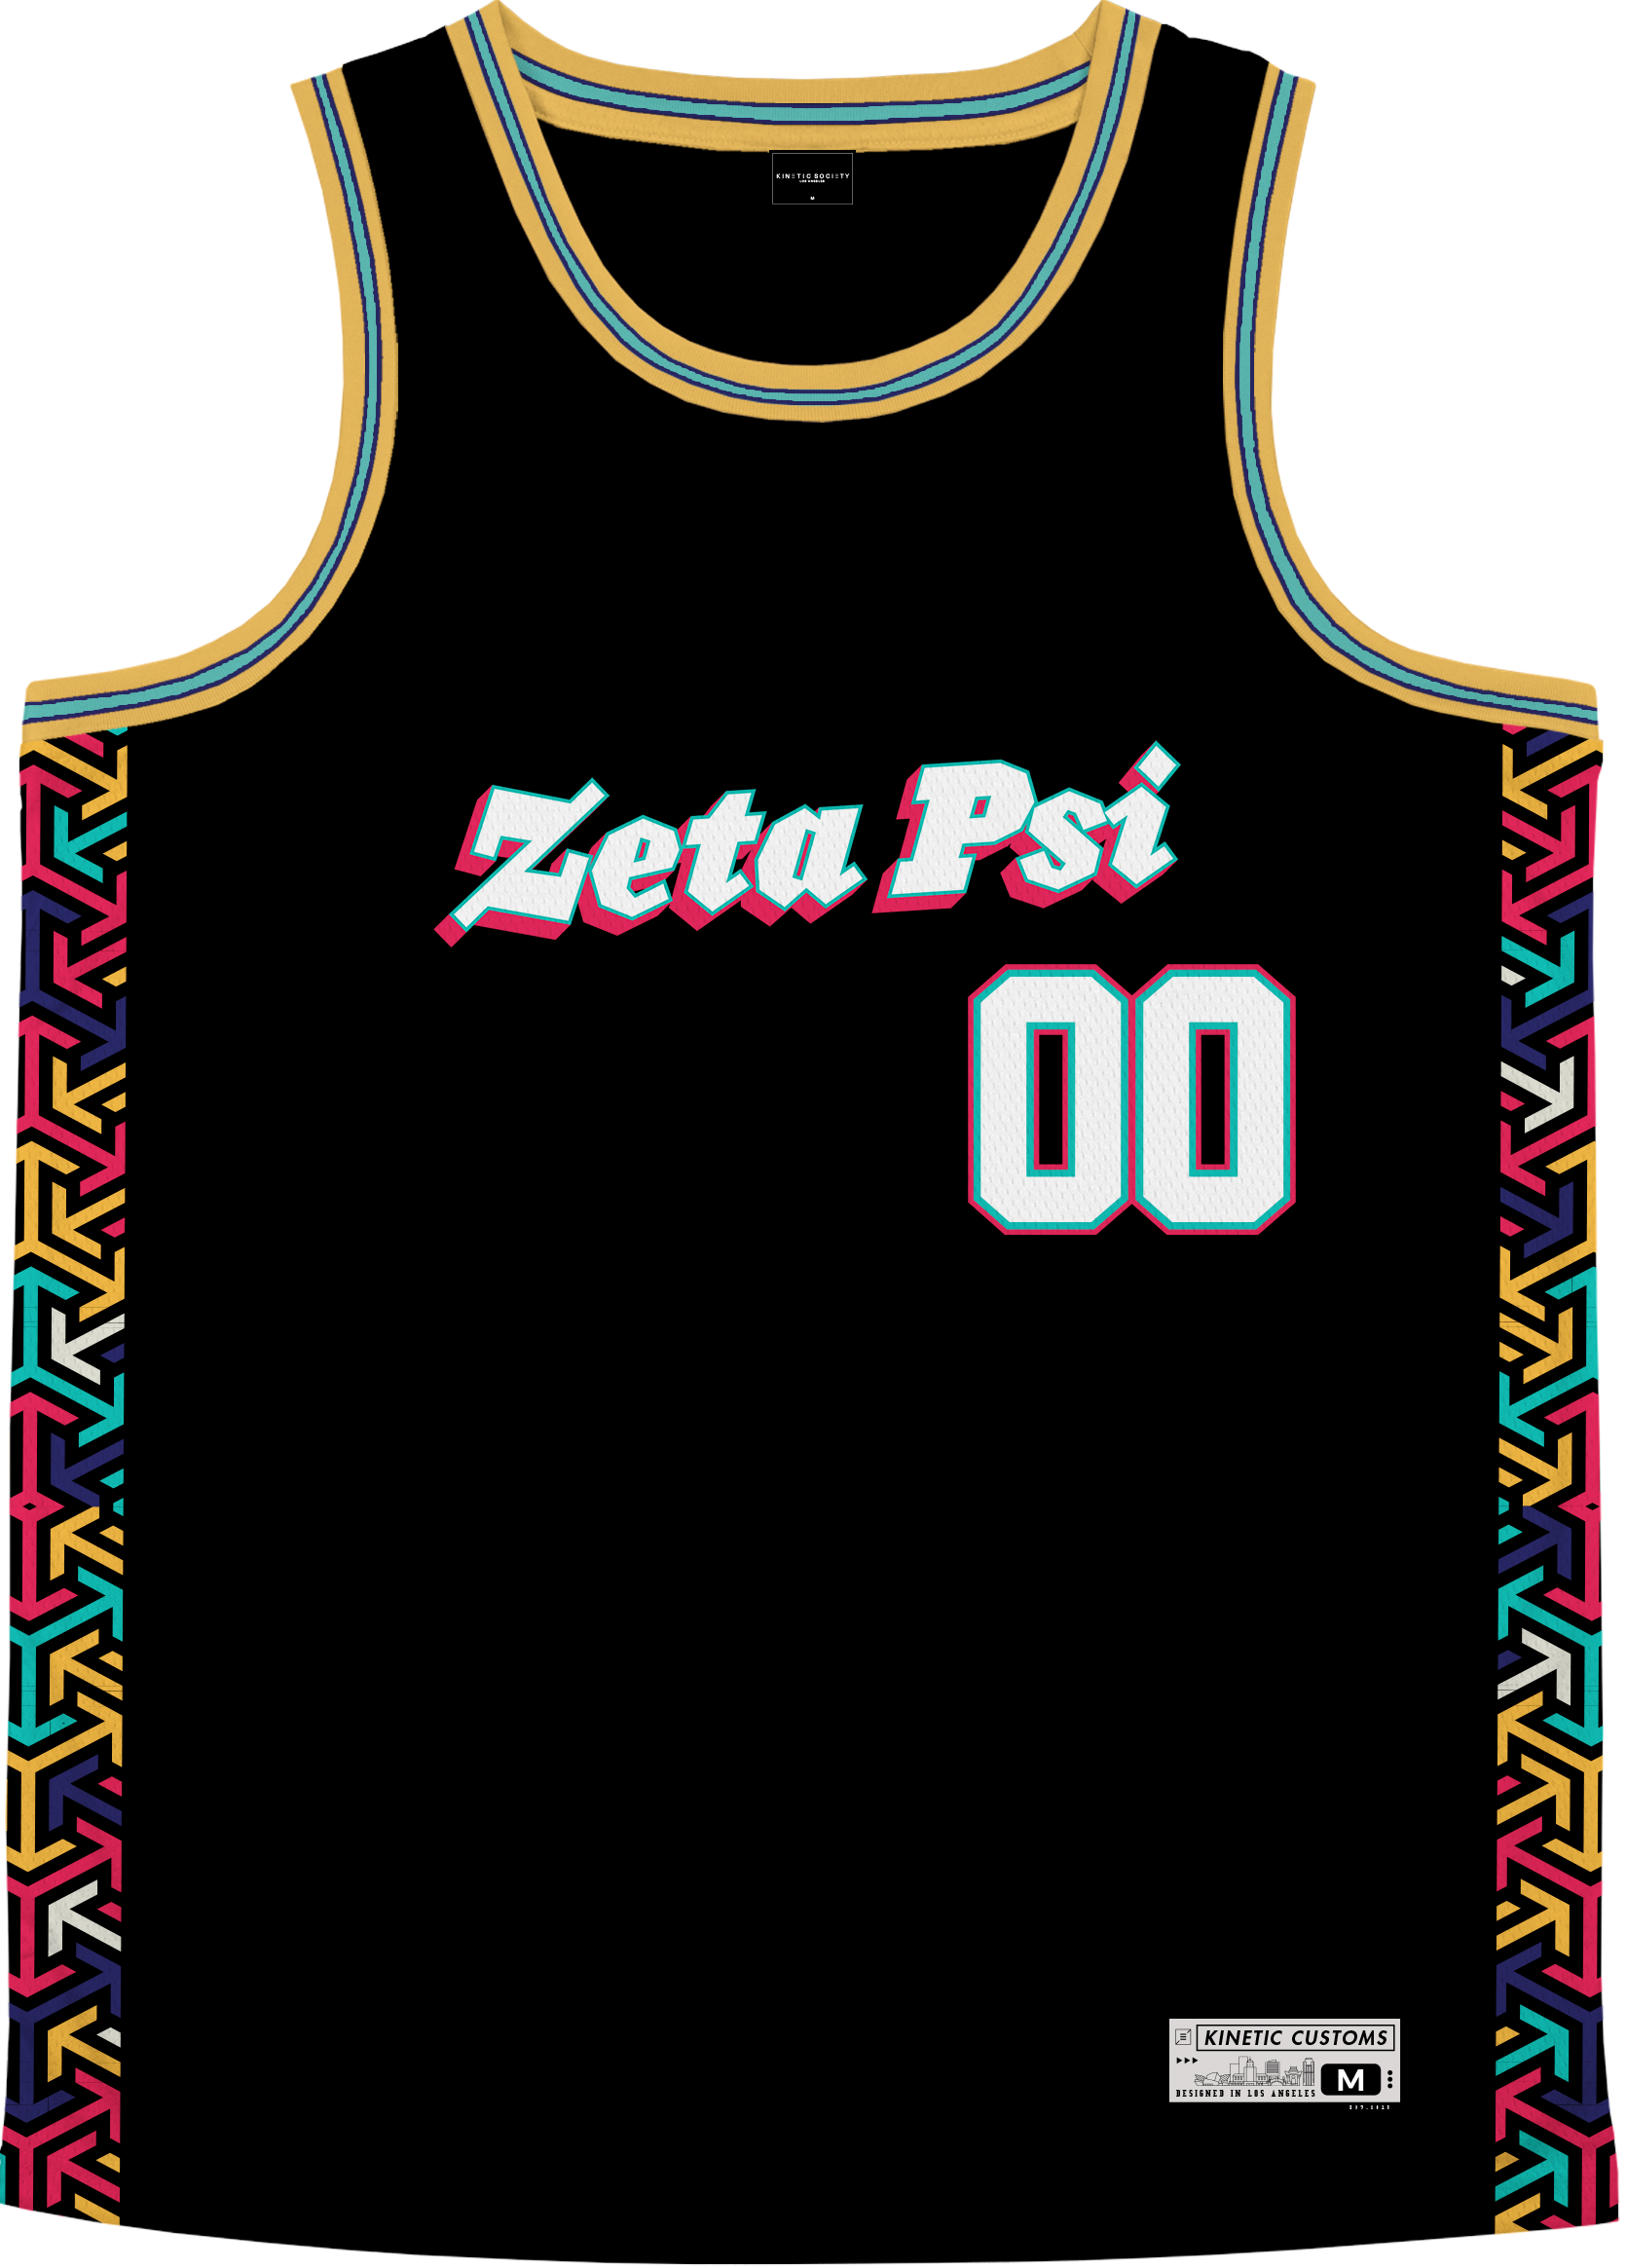 ZETA PSI - Cubic Arrows Basketball Jersey